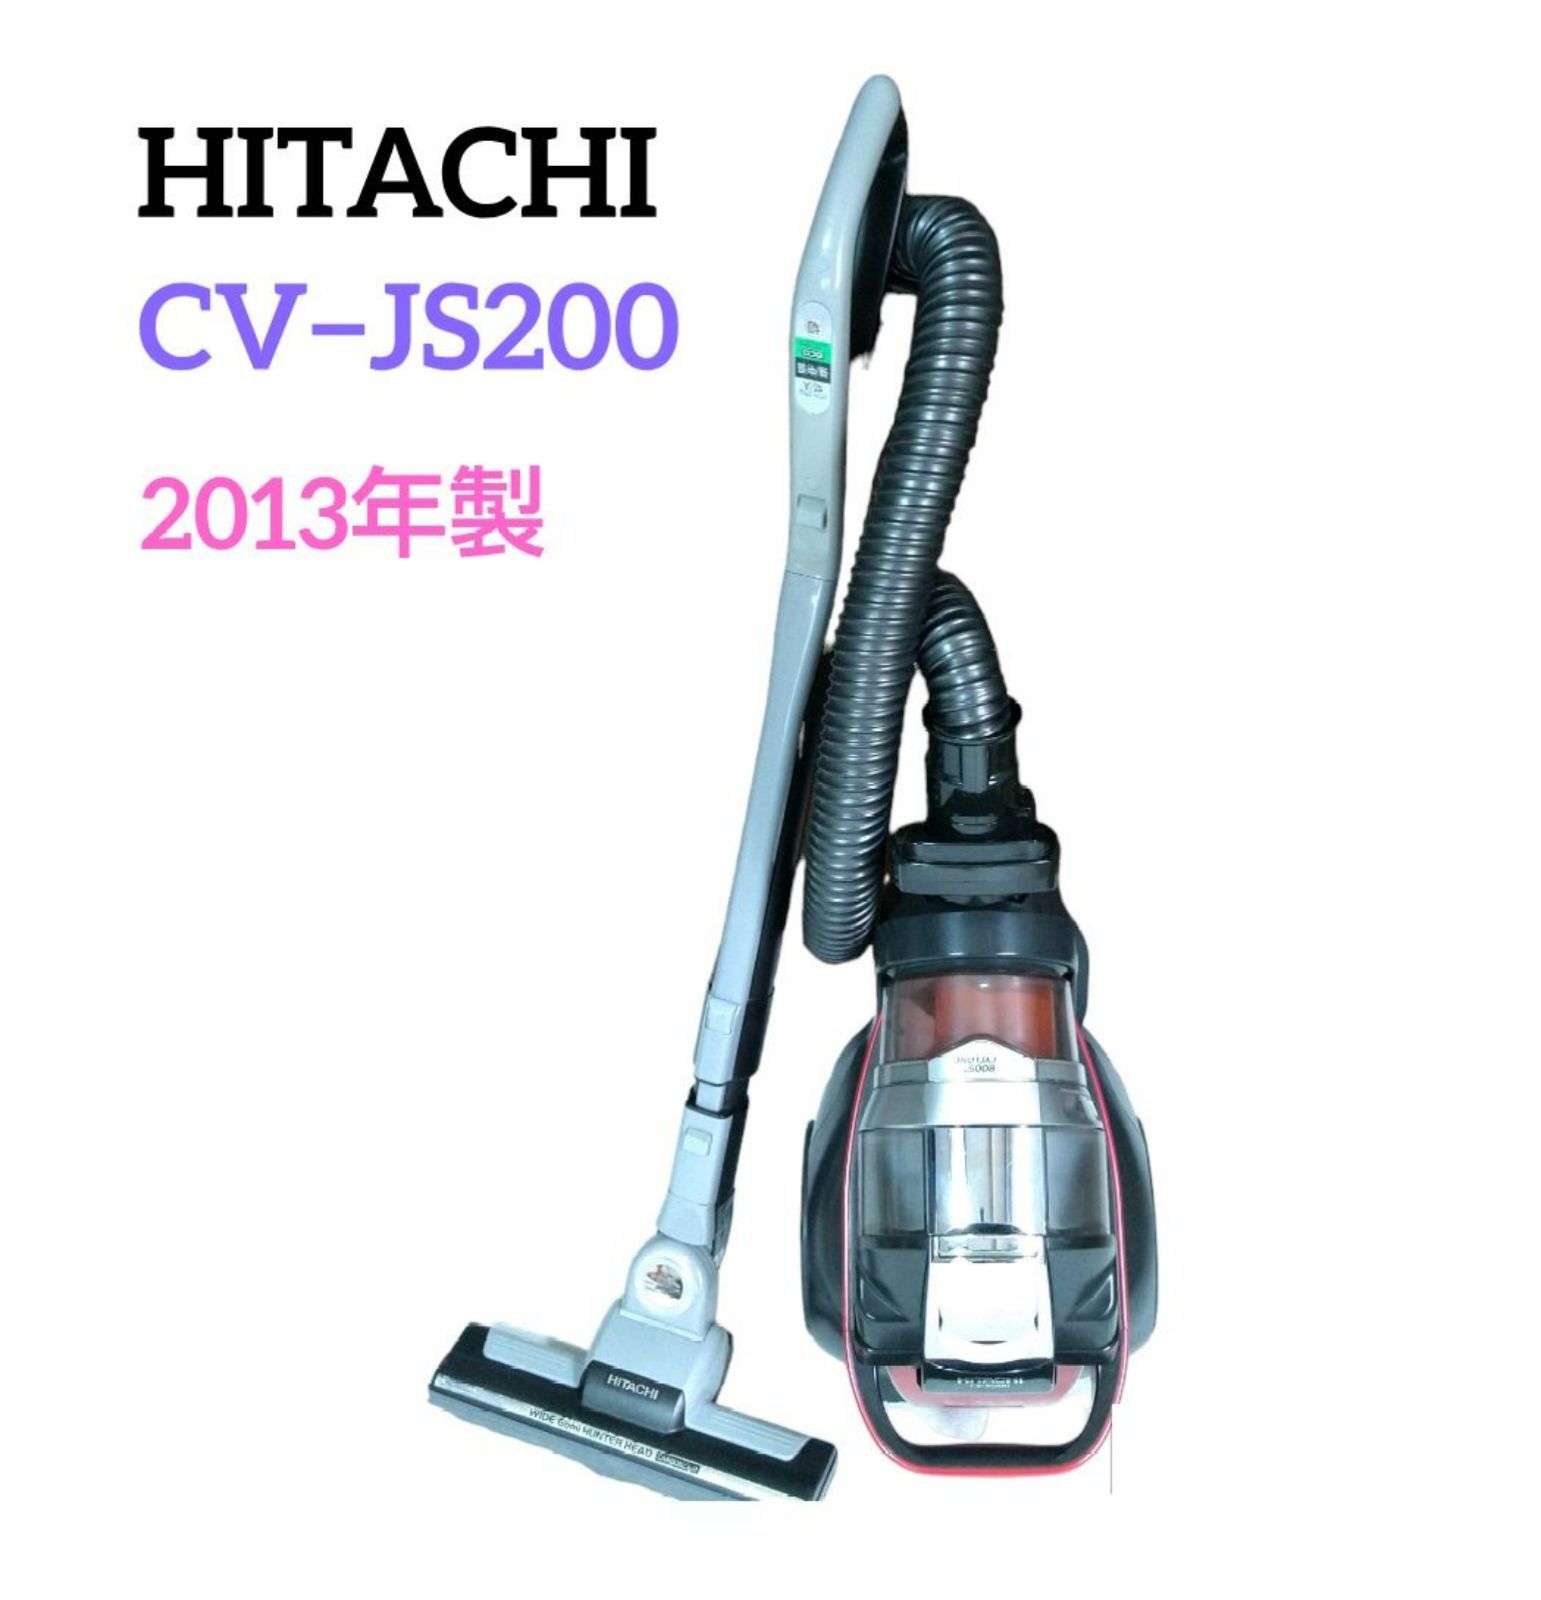 HS042】HITACHI CV-JS200 2013年製 サイクロン掃除機 キャニスター型 